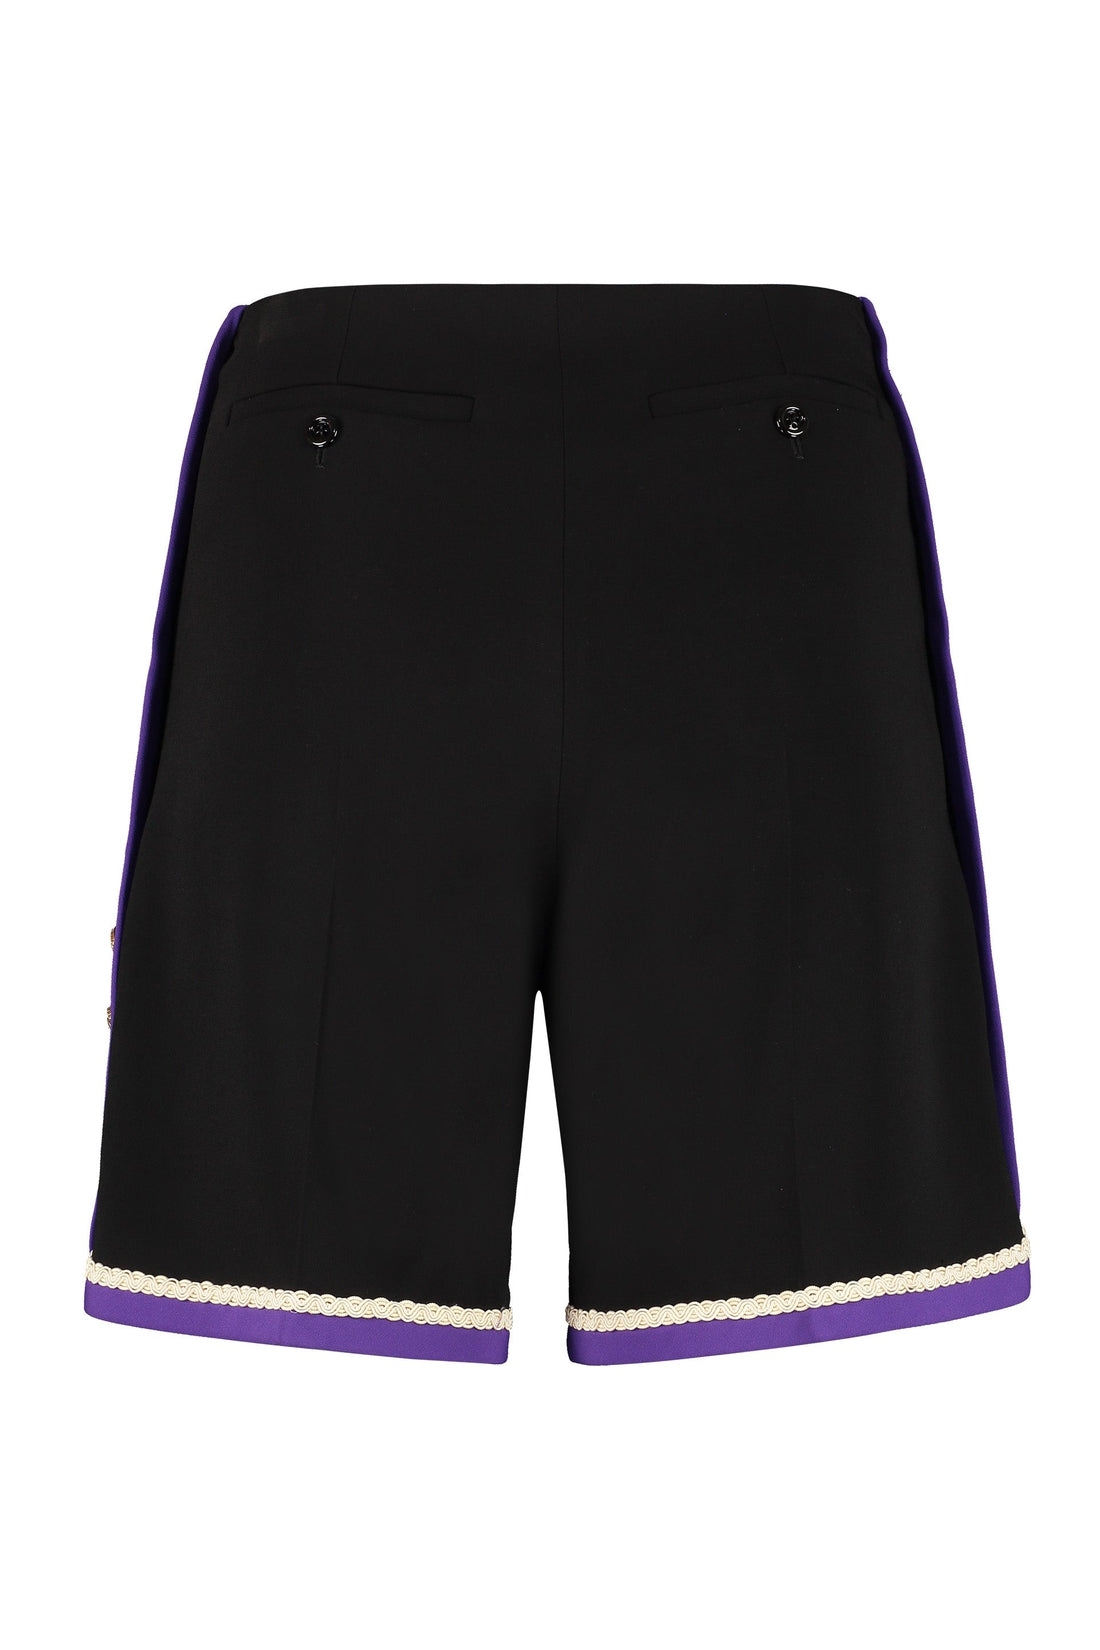 Gucci-OUTLET-SALE-Contrasting side stripe shorts-ARCHIVIST